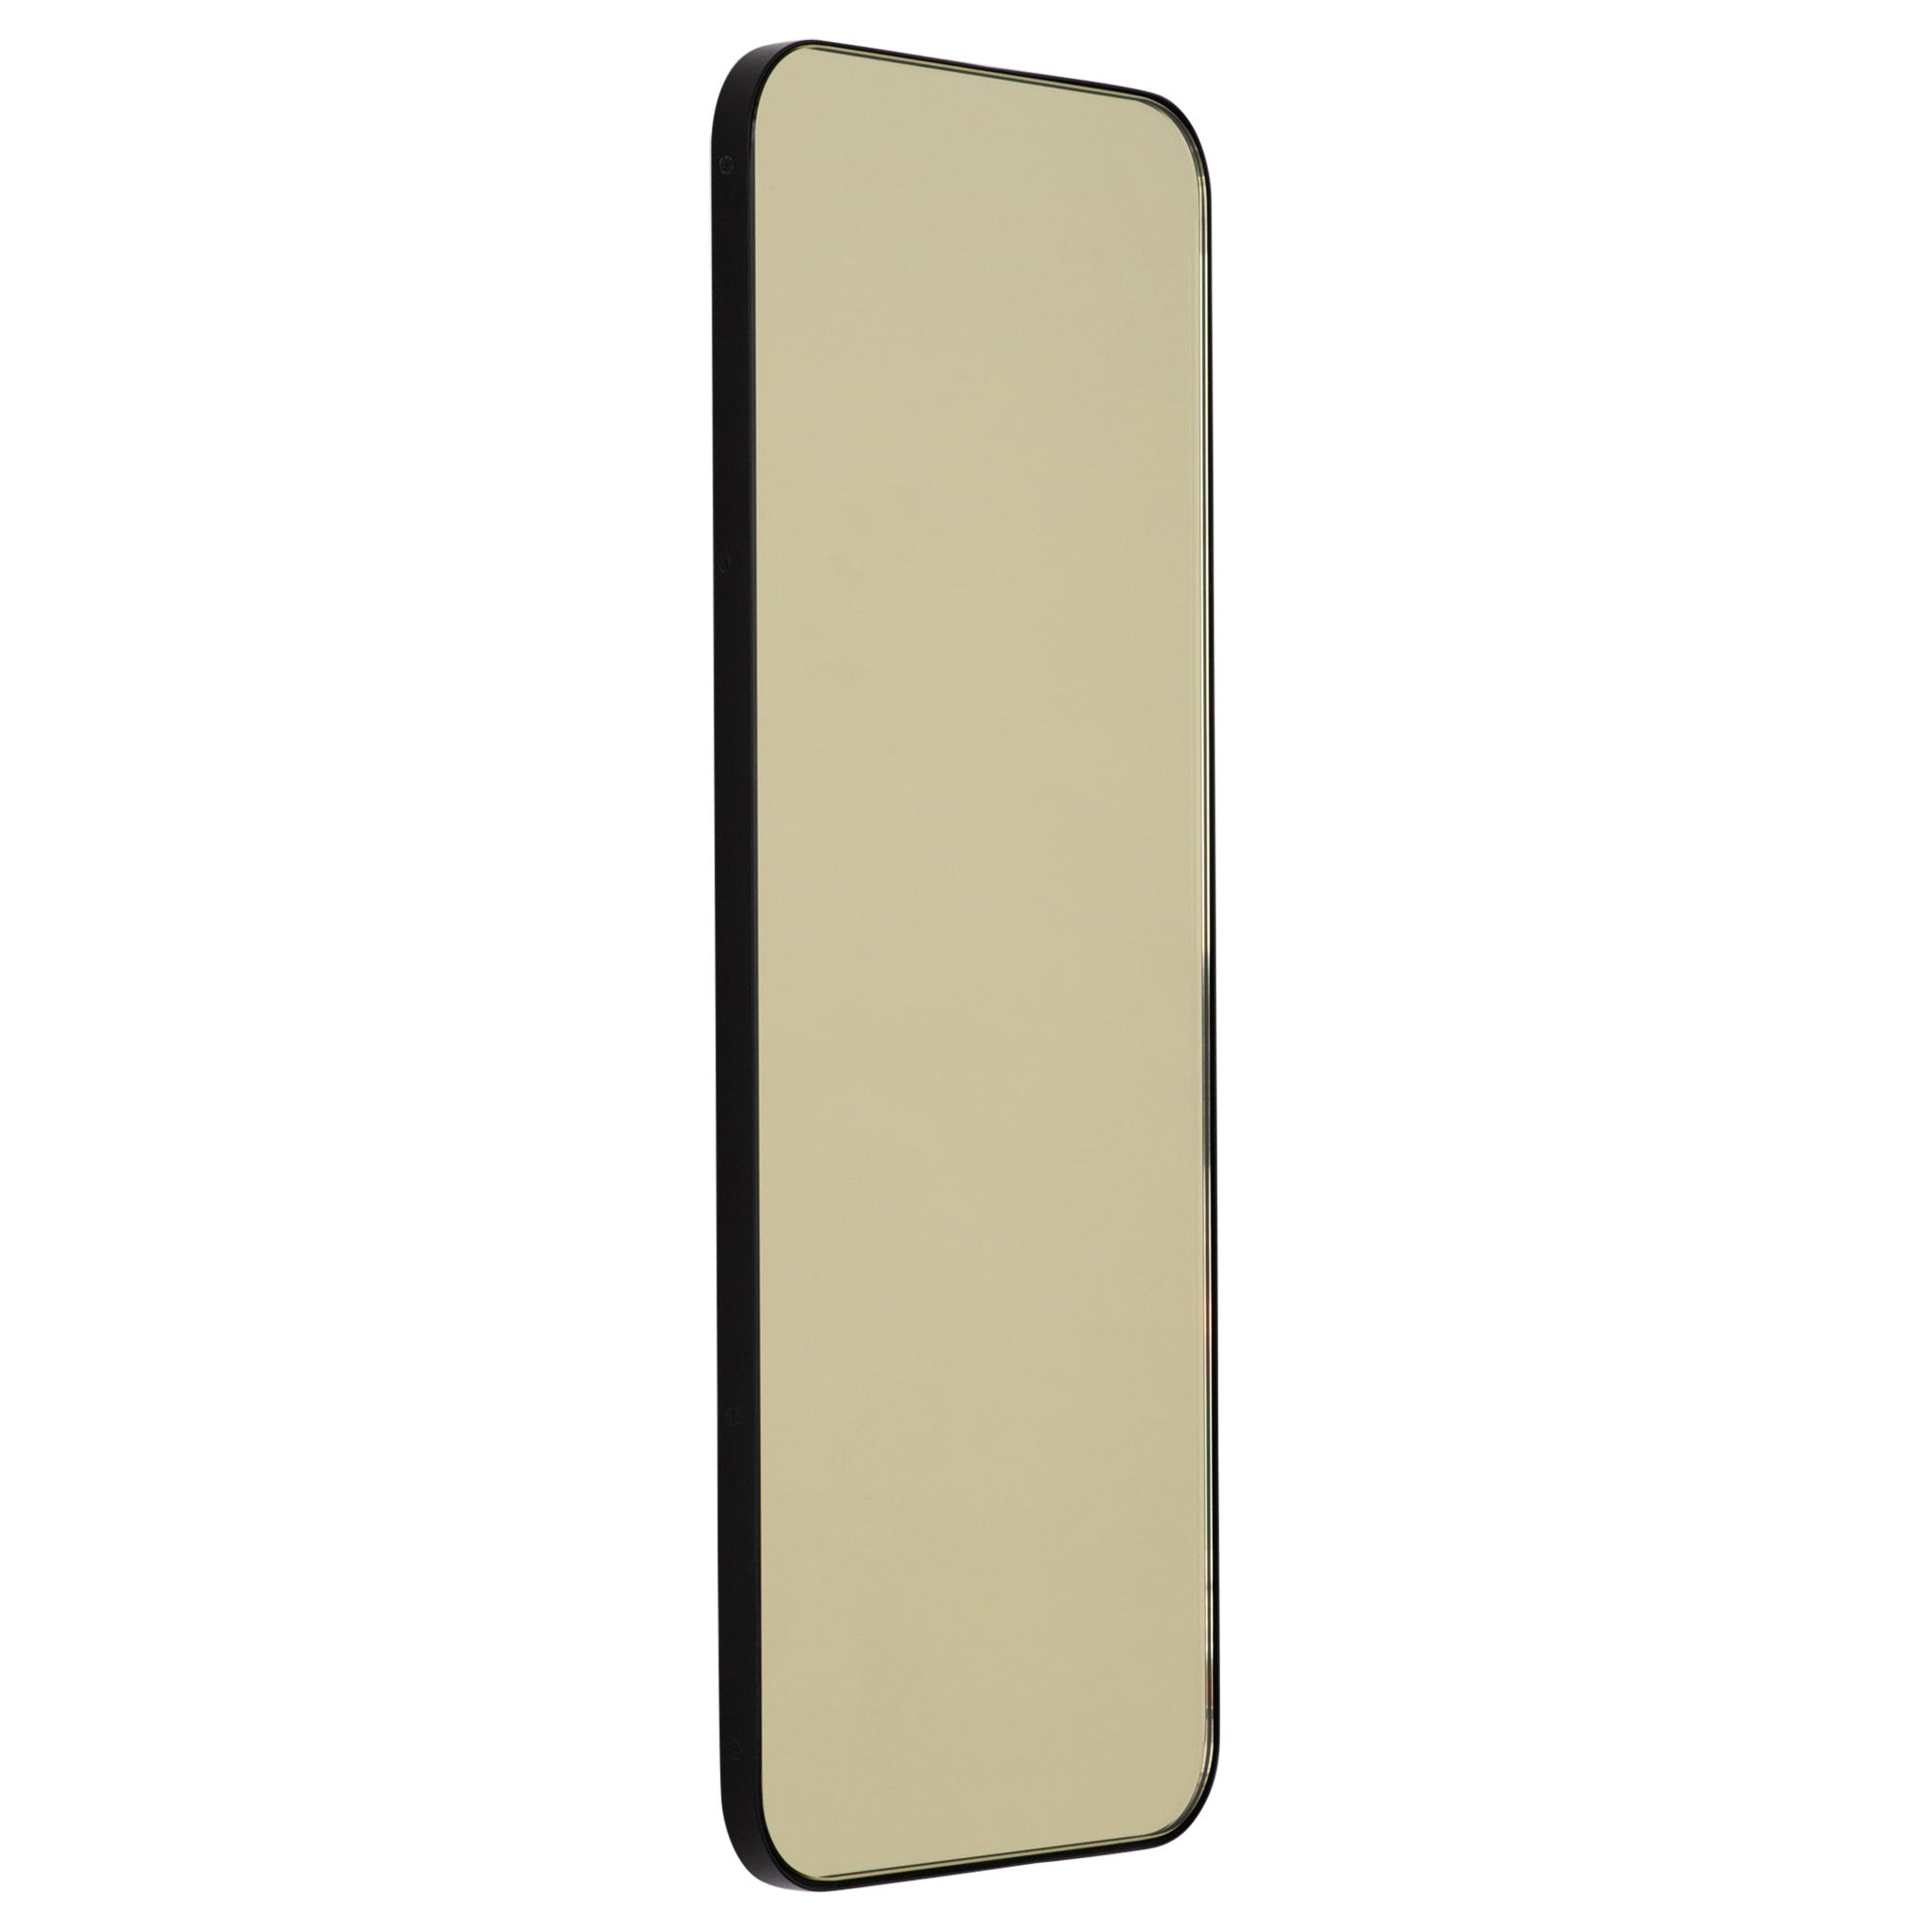 Quadris Gold Tinted Rectangular Modern Mirror with a Black Frame, XL